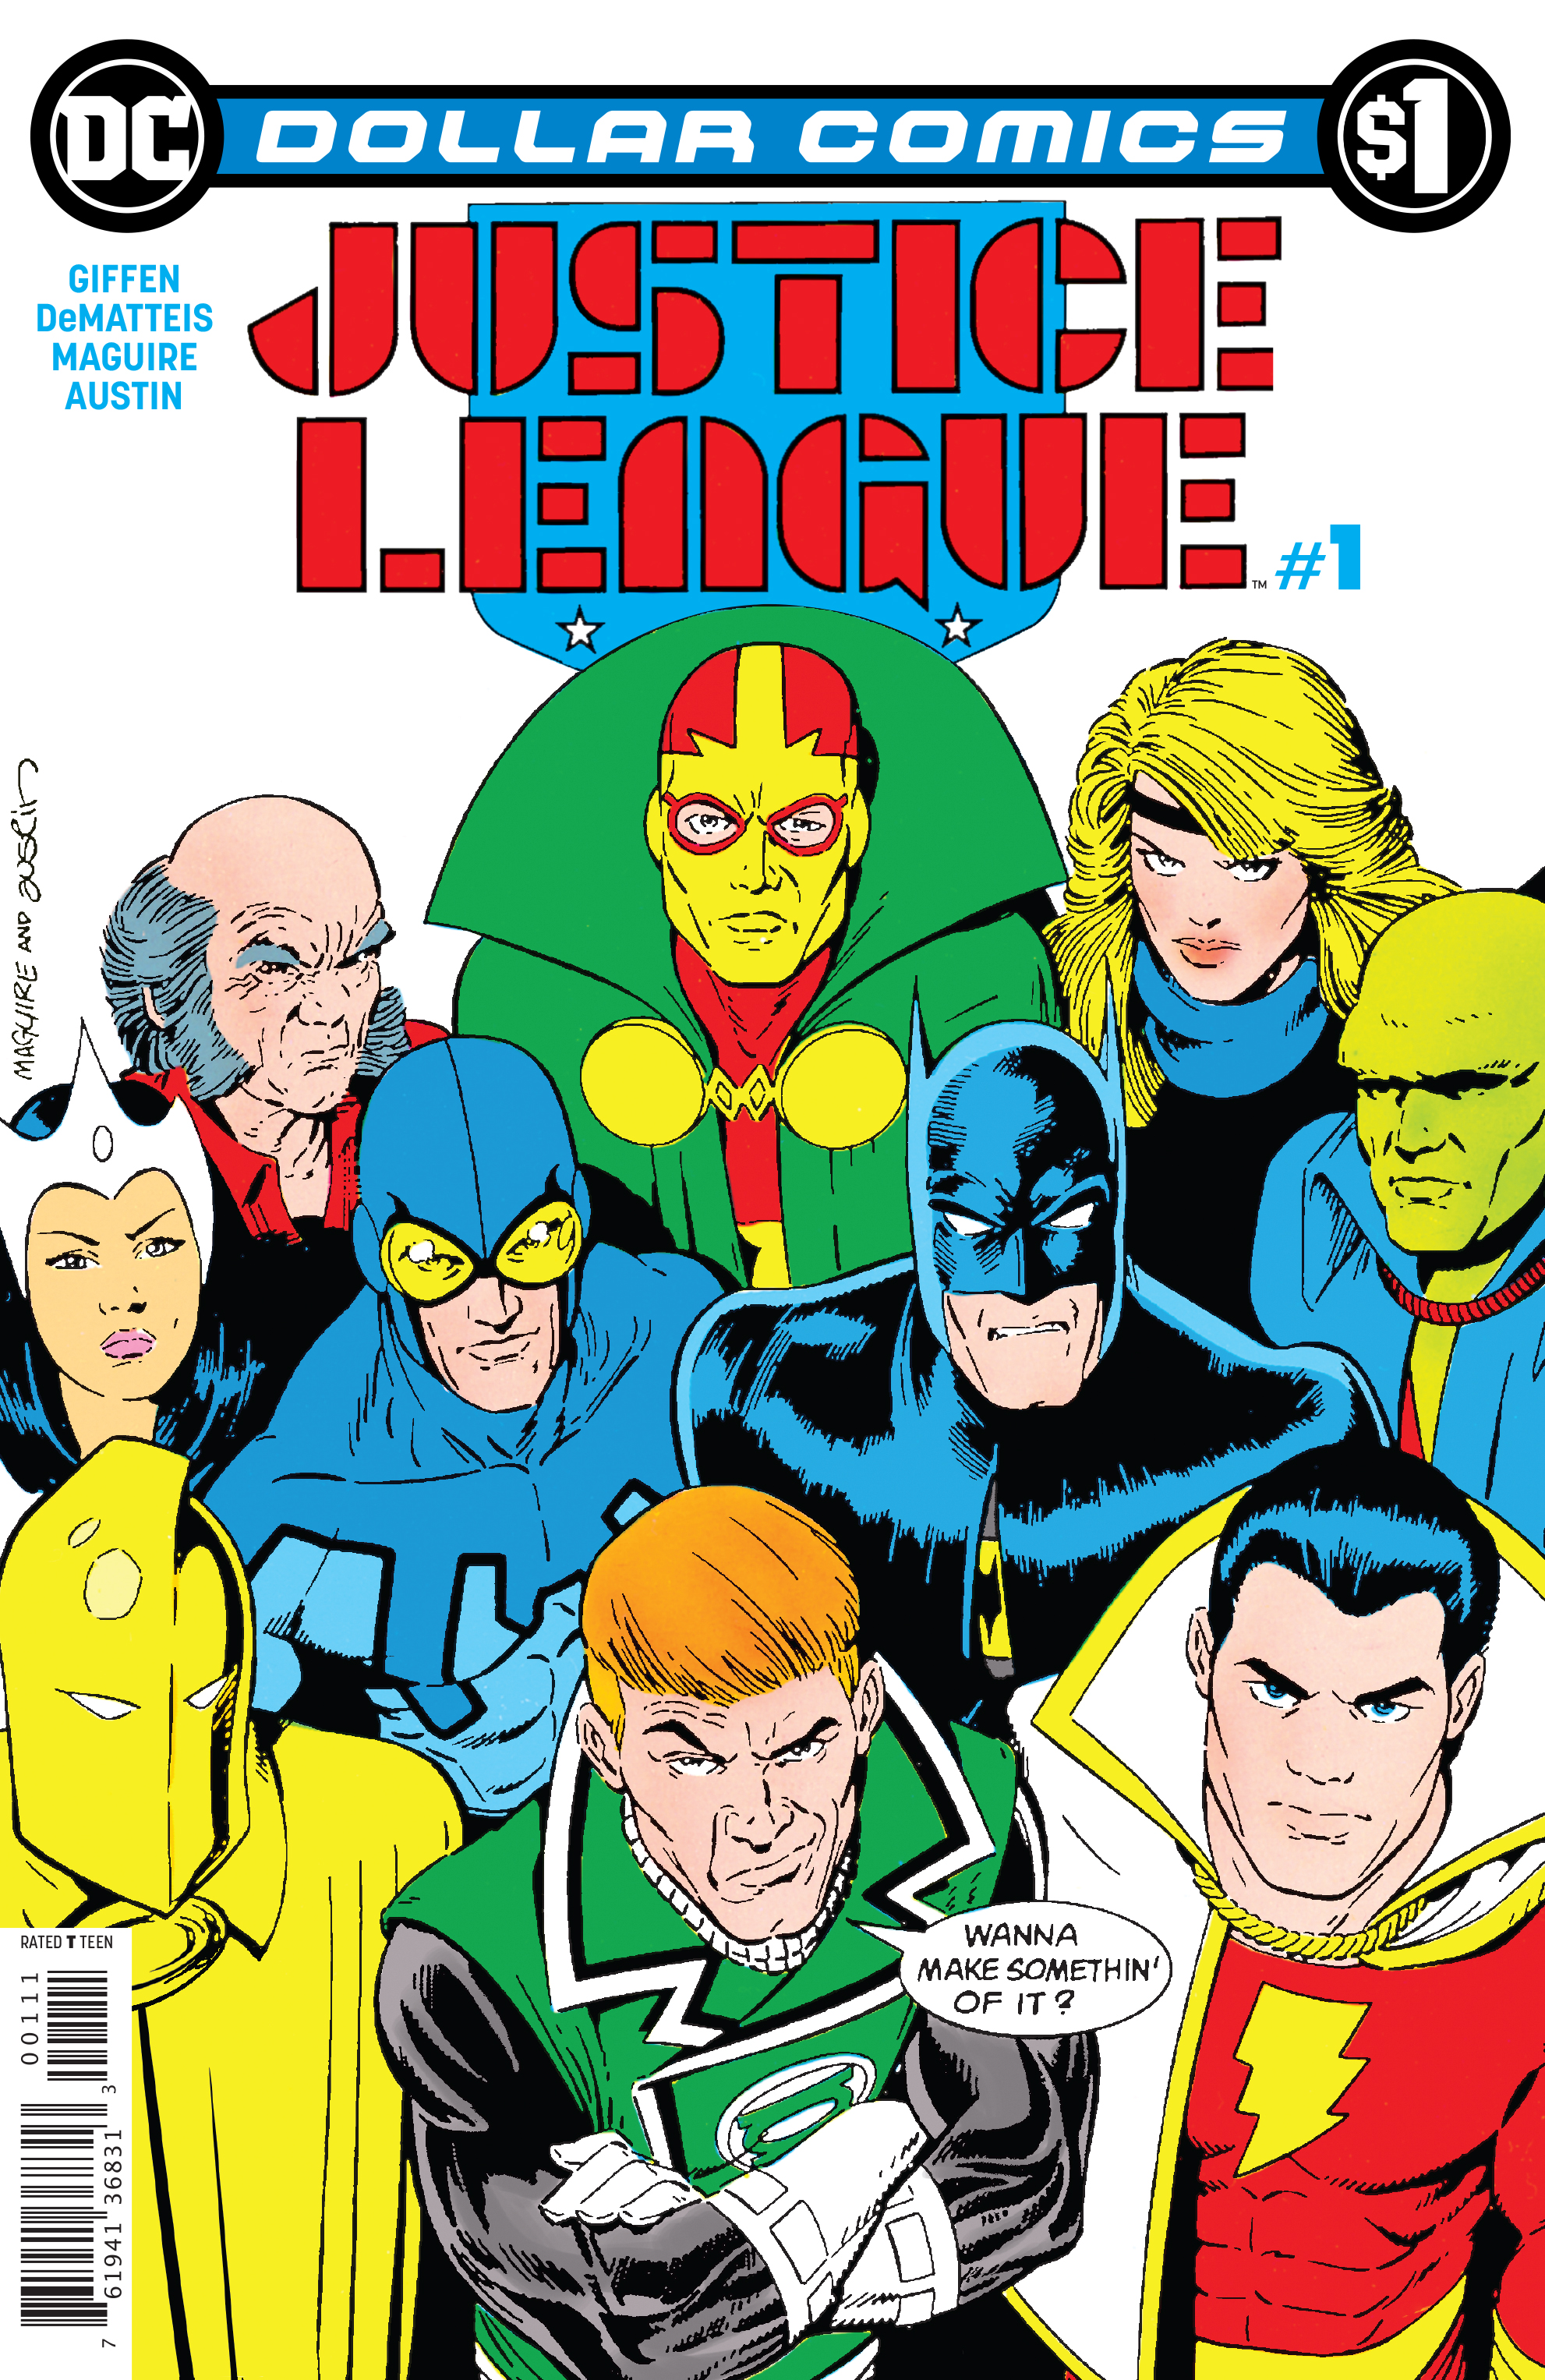 Dollar Comics Justice League #1 1987